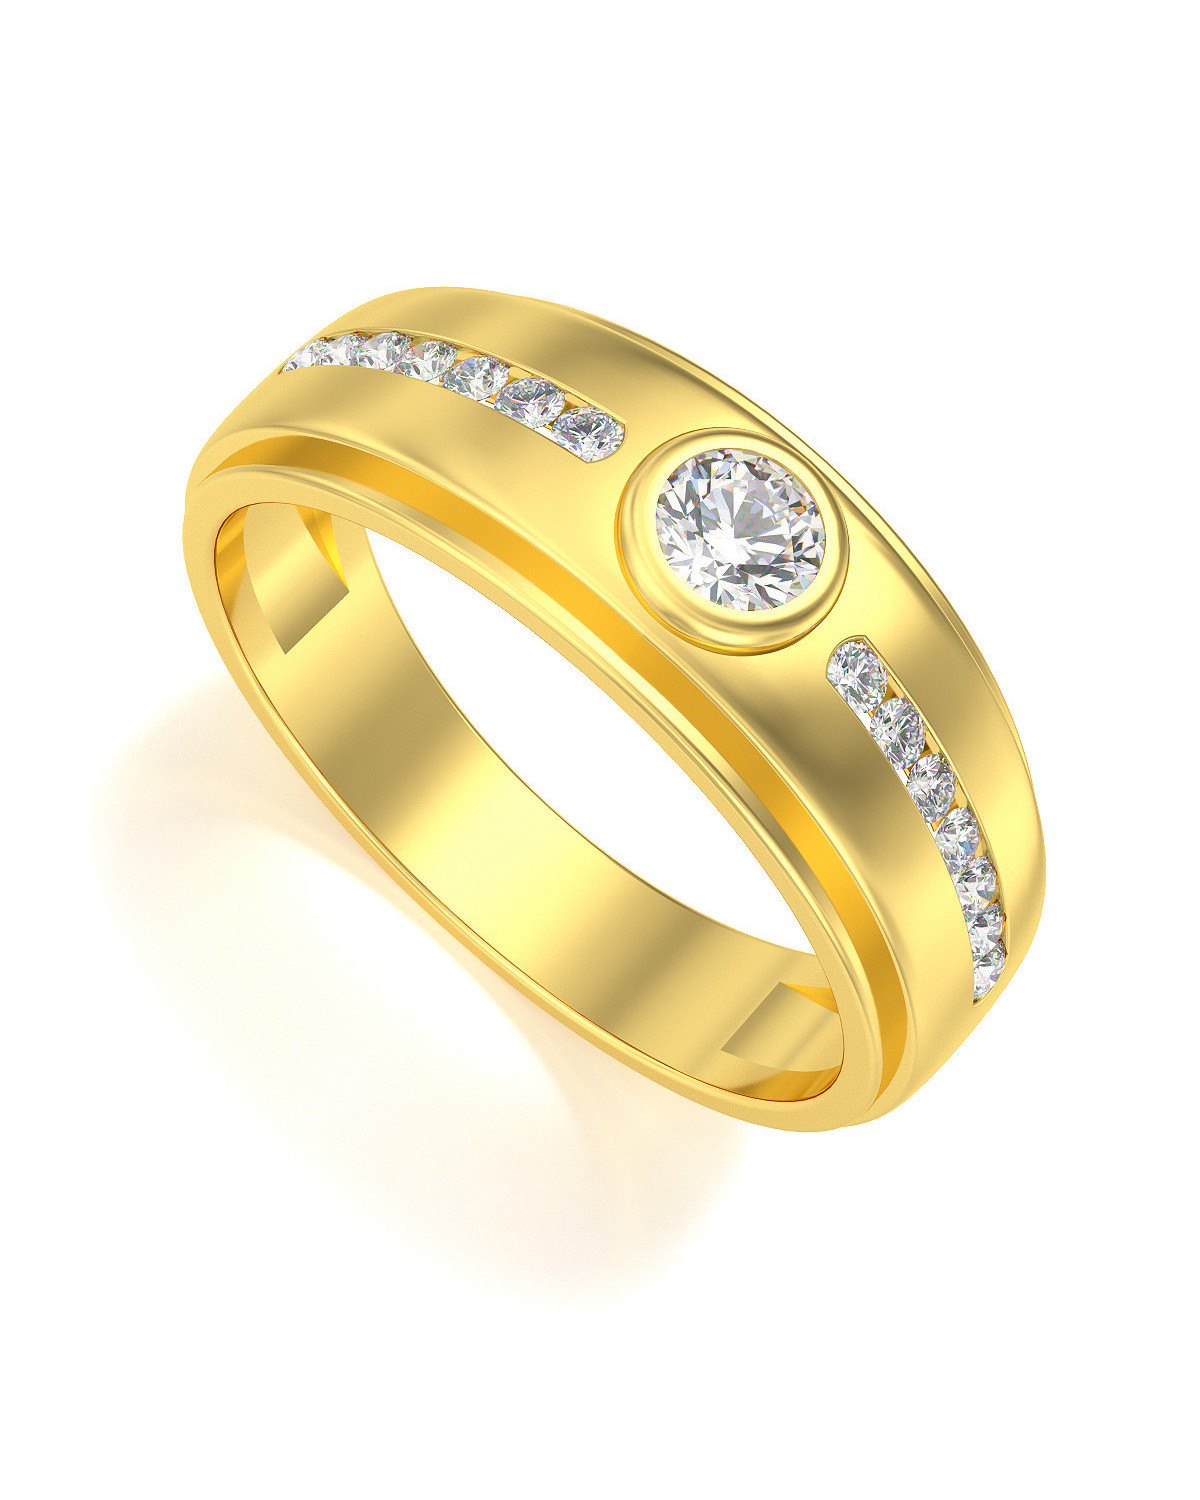 Gold Onyx Diamonds Biker Ring ADEN - 1